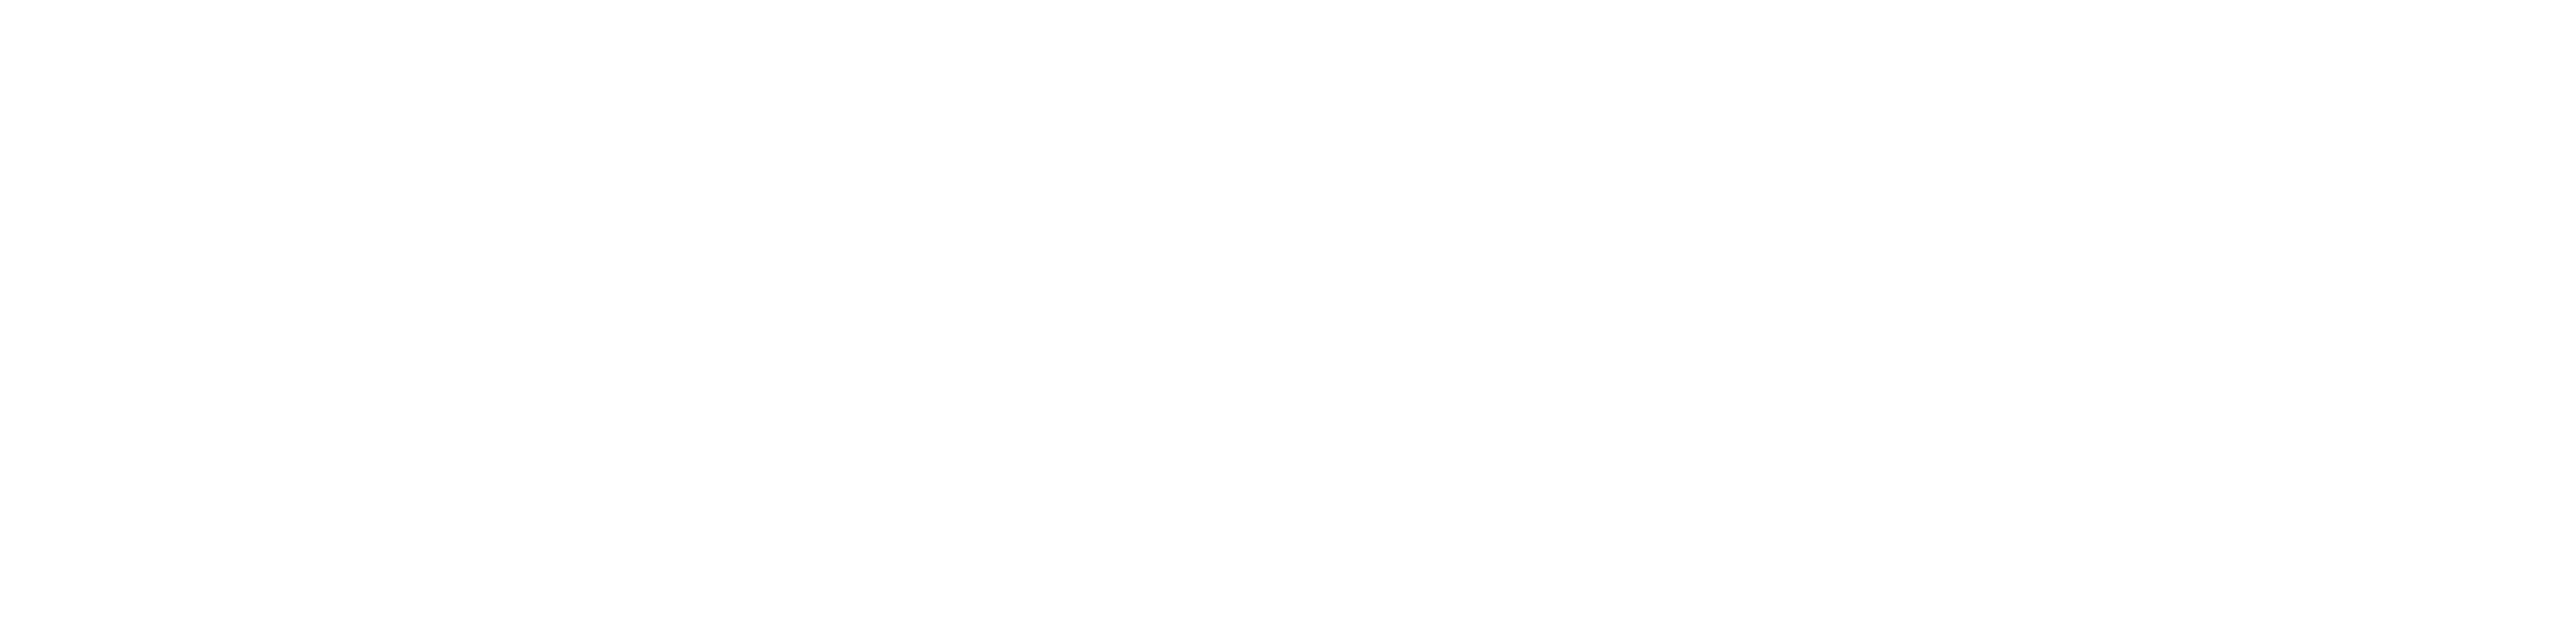 EU Nextgeneration